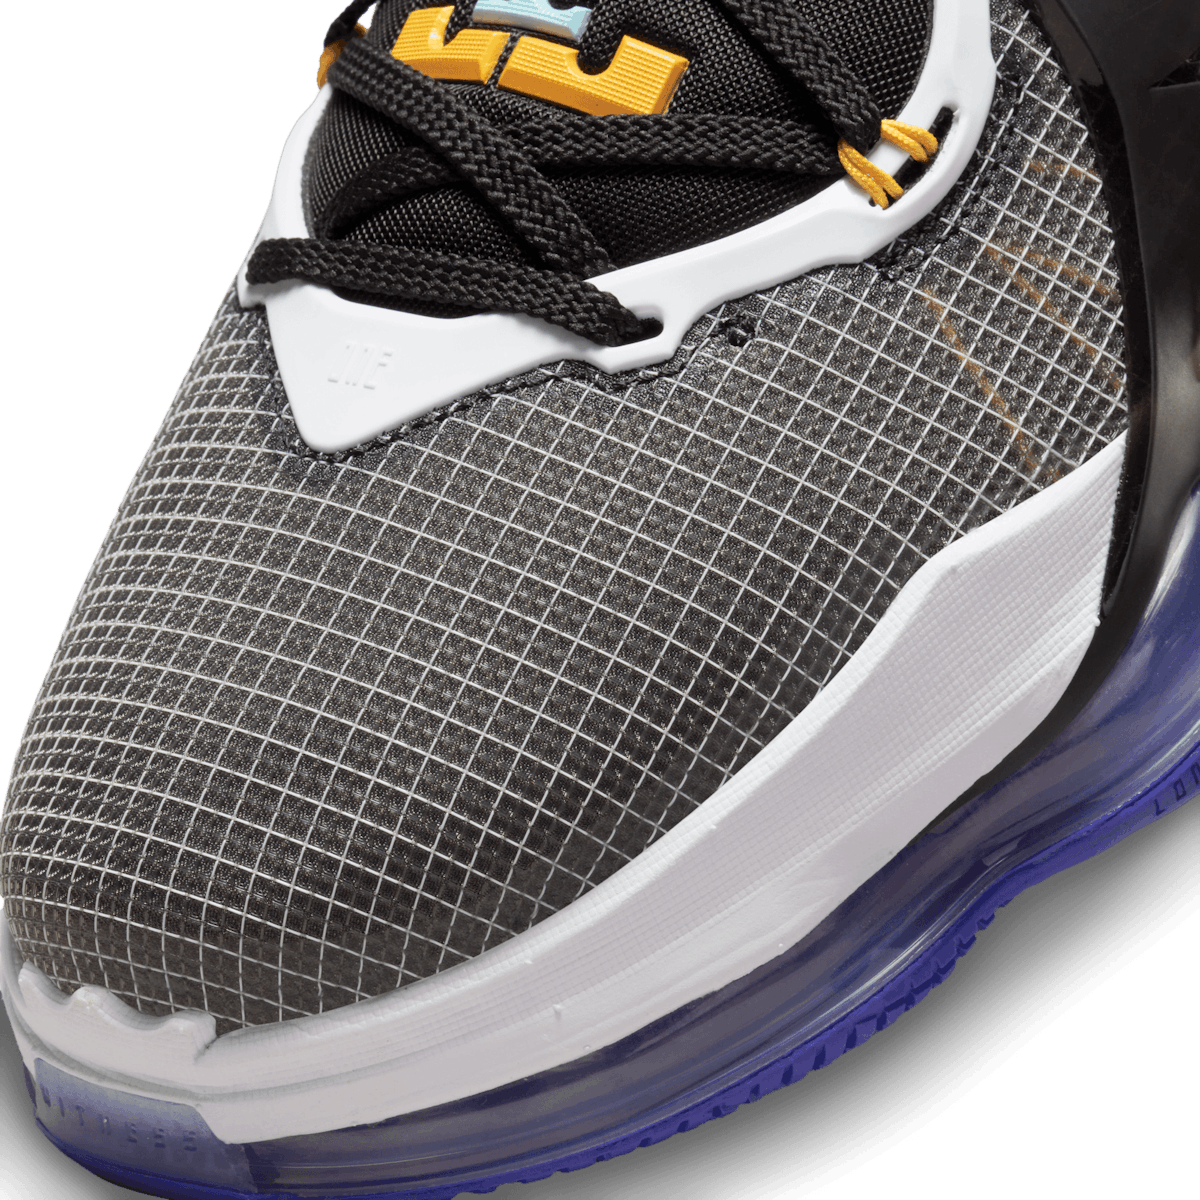 Nike LeBron 19 Basketball Shoes in Black Angle 4